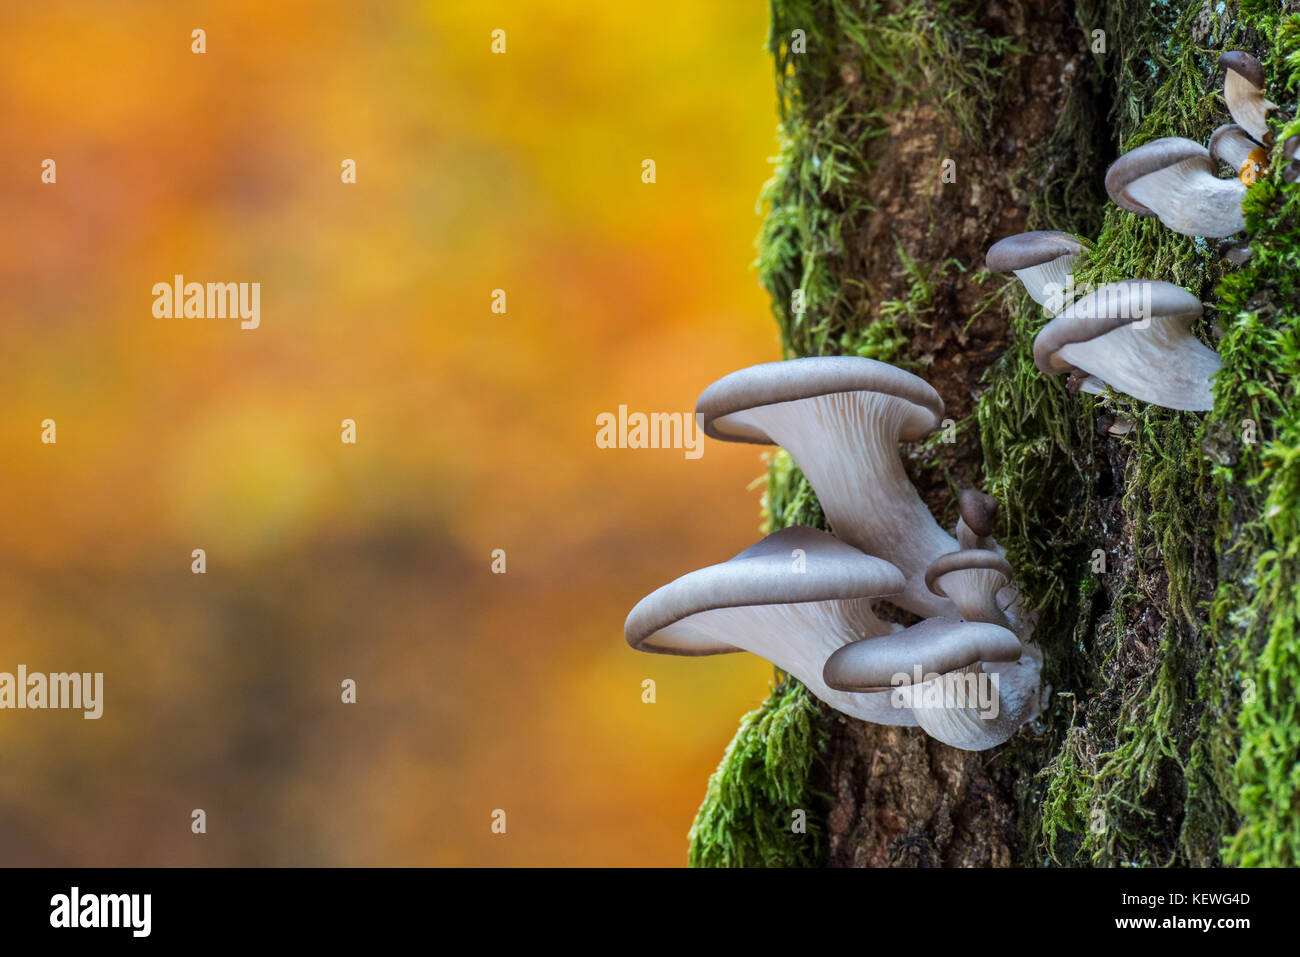 Oyster mushroom / Oyster bracket fungus (Pleurotus ostreatus) growing on tree trunk in autumn forest Stock Photo